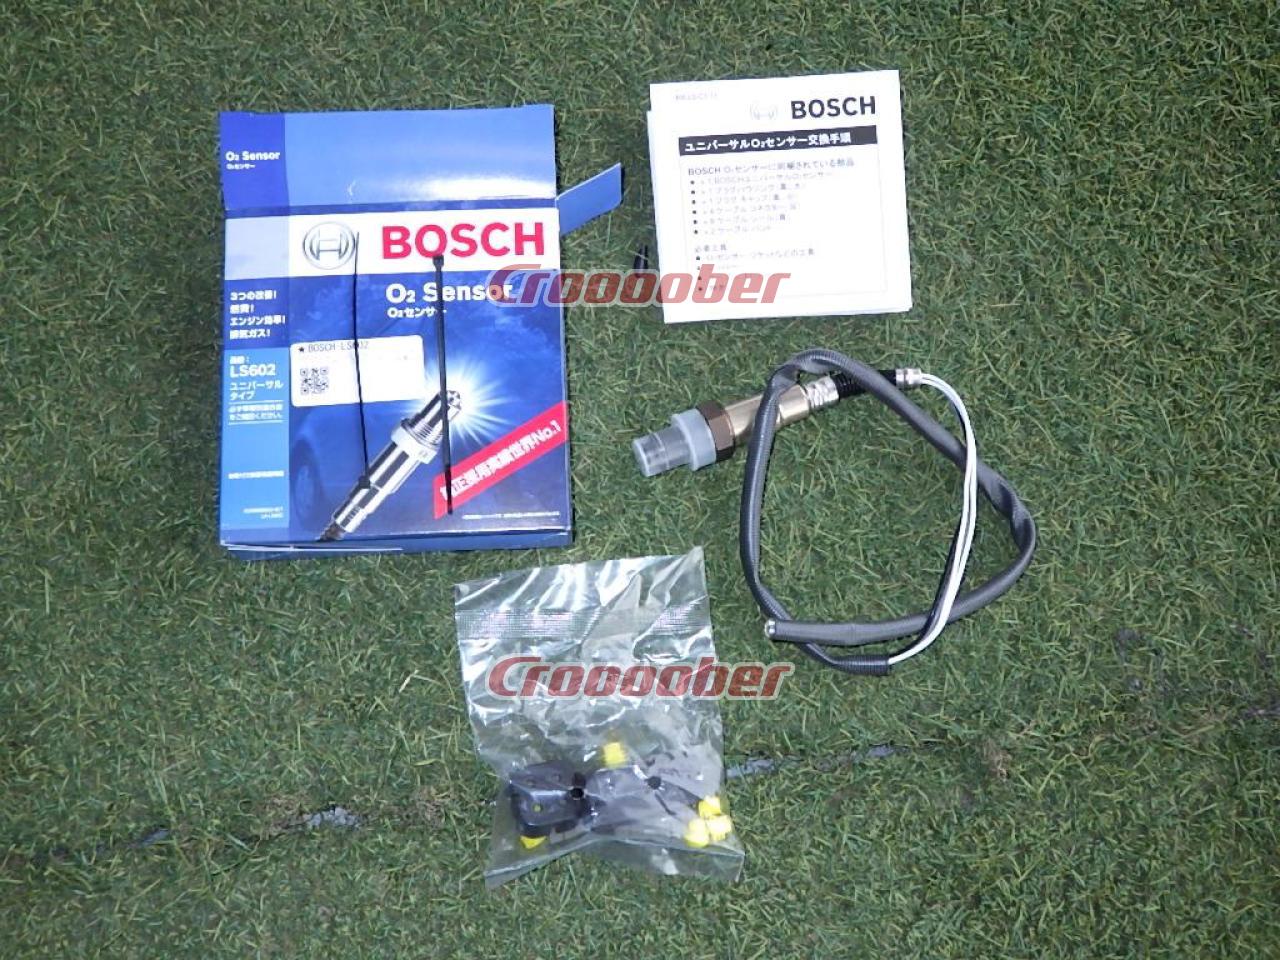 BOSCH(ボッシュ)ユニバーサルO2センサー/ラムダセンサー 【LS602】並行